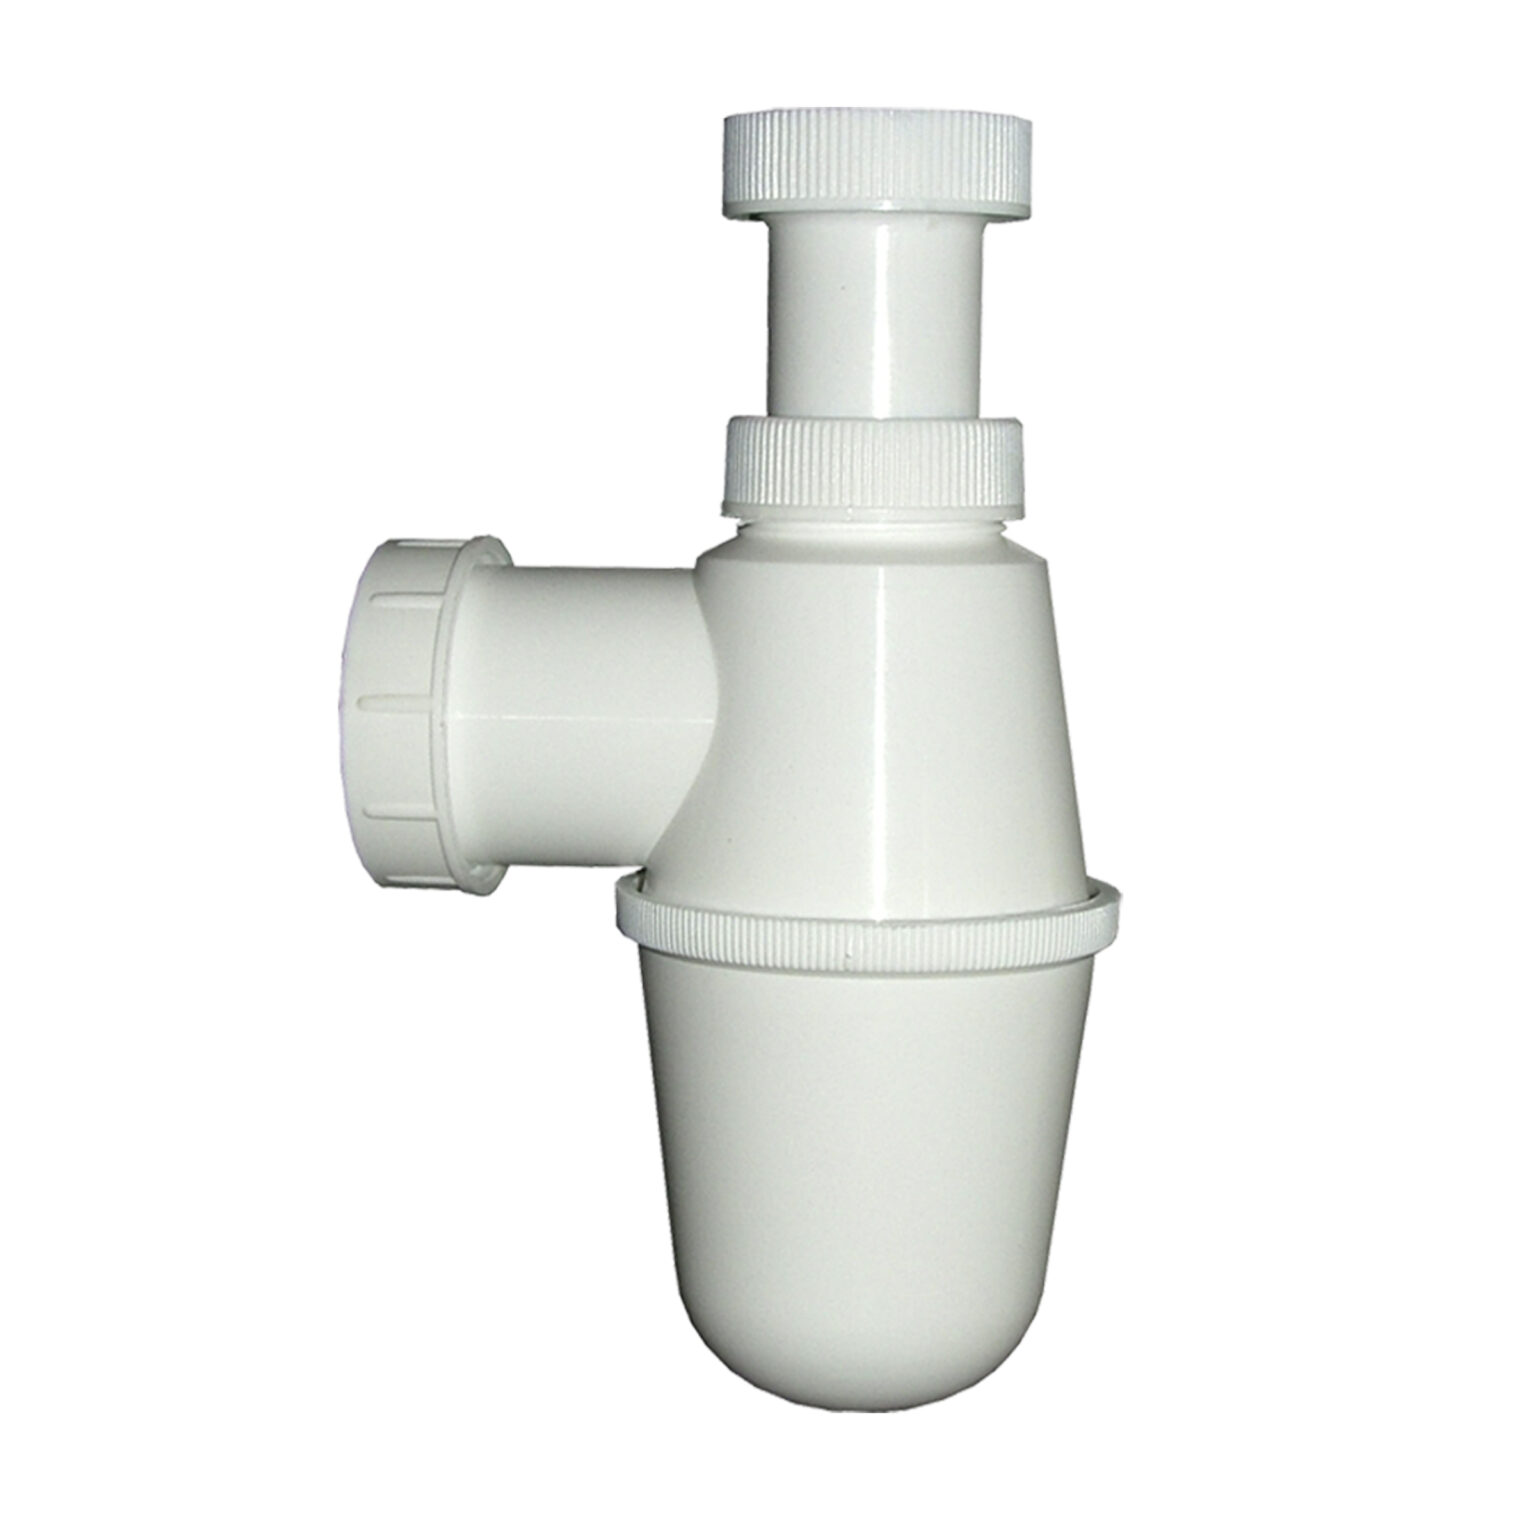 FT 0104 PVC Bottle Trap 1 1 2 X 1 1 2 Inch Kitchen Sink Use 1536x1536 